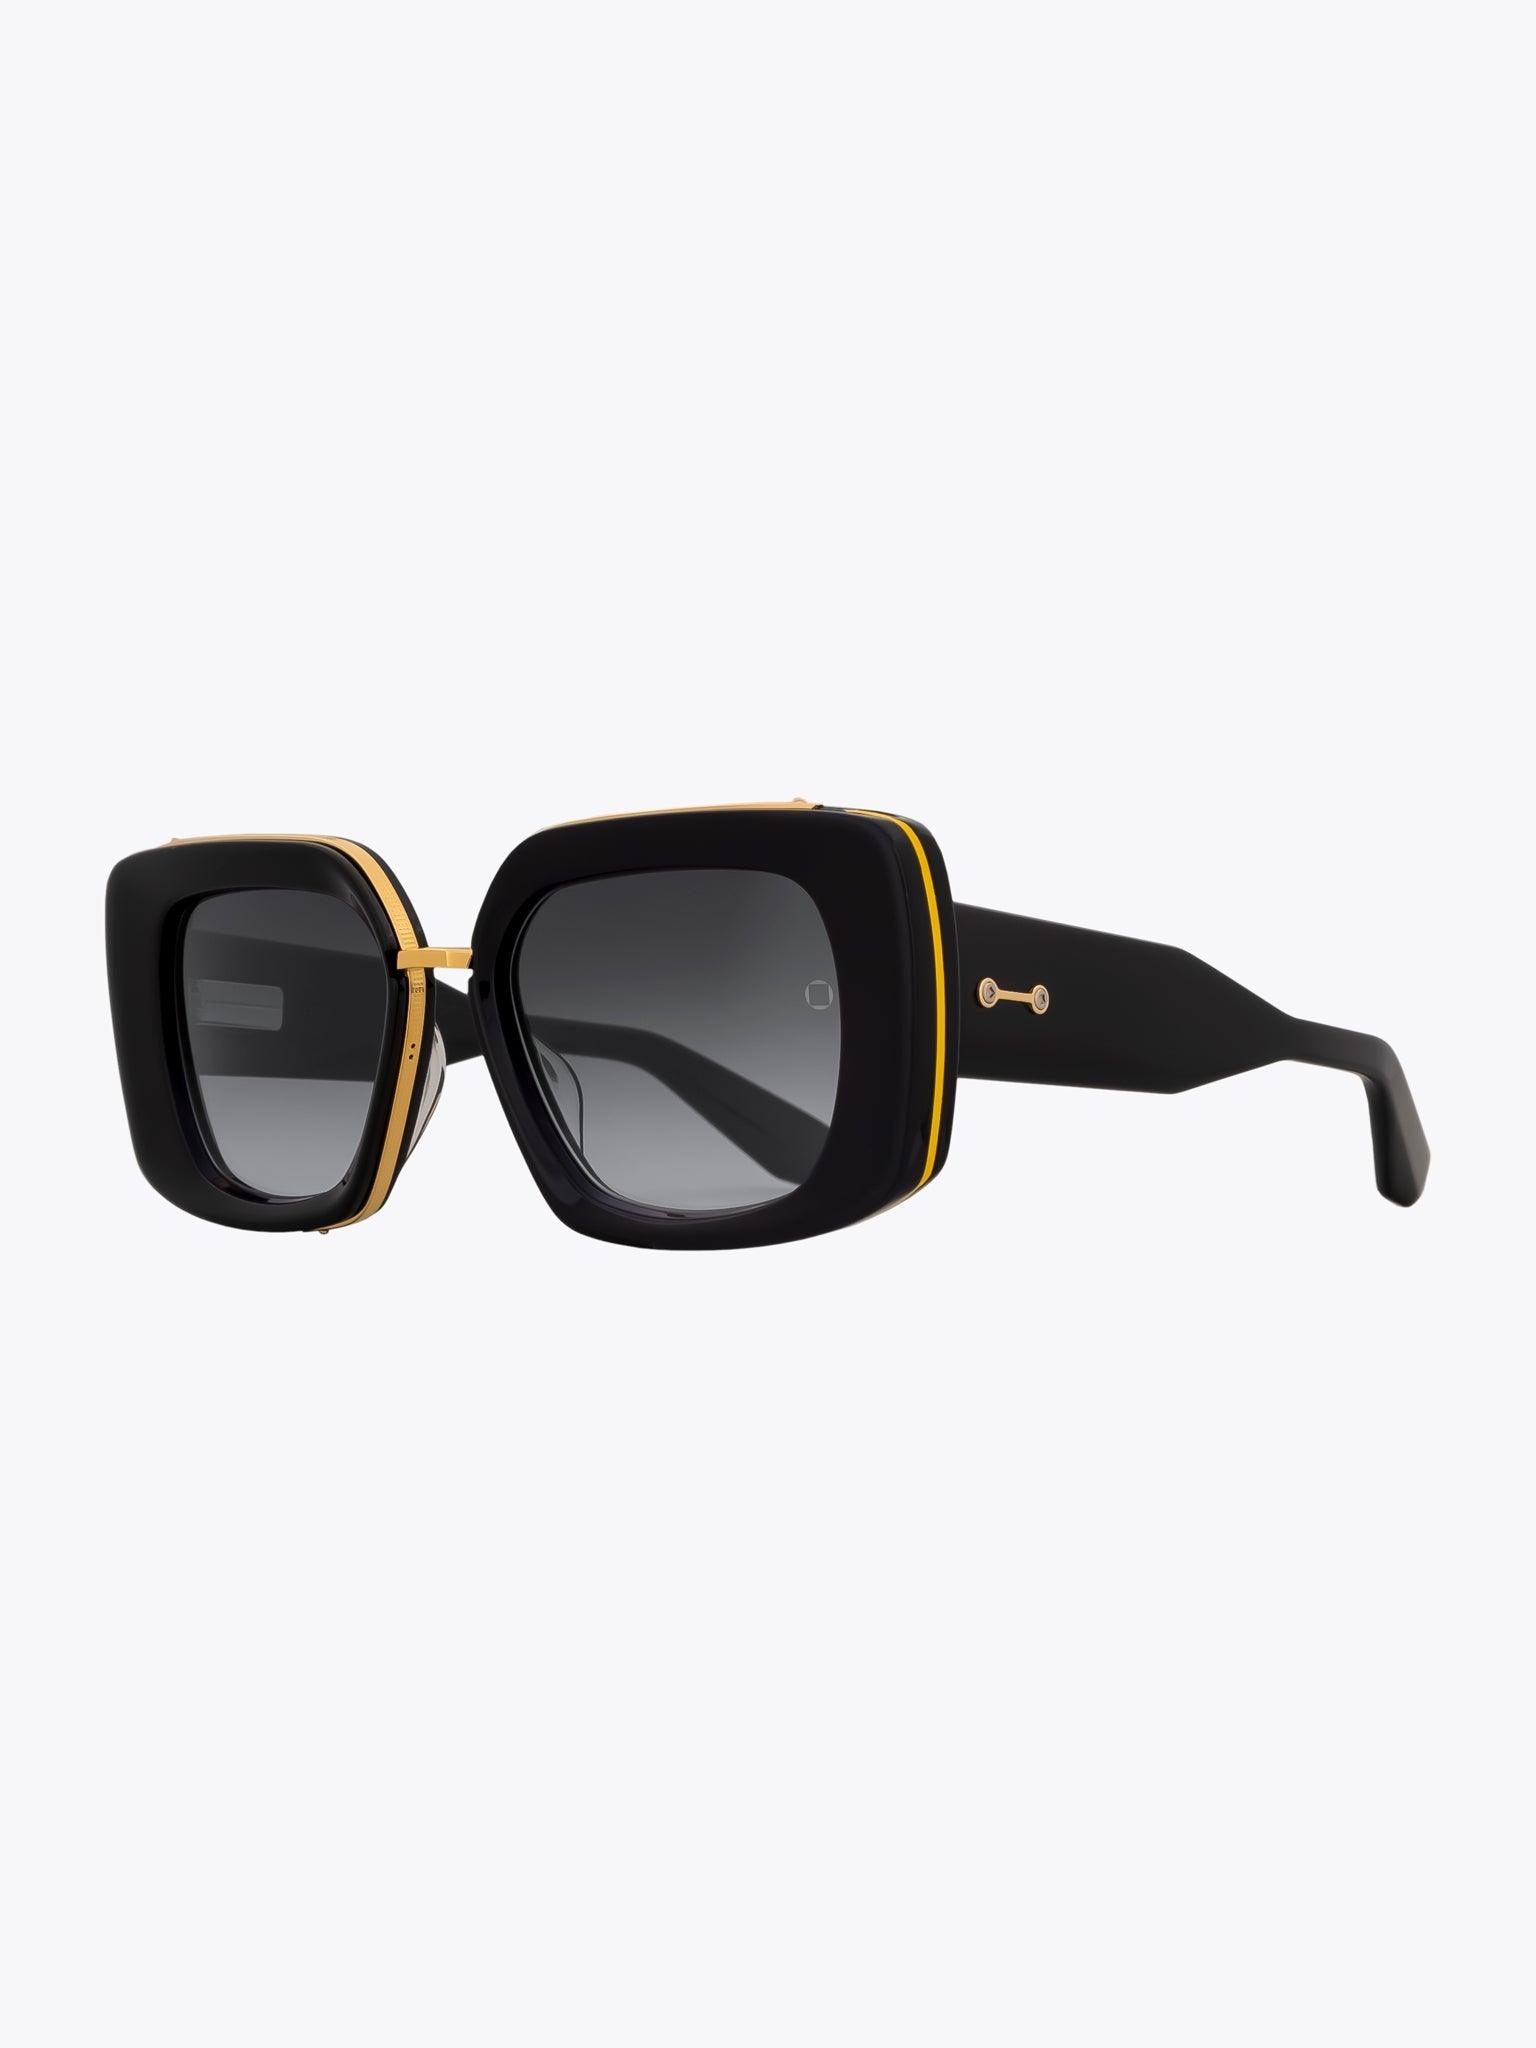 AKONI Virgo Black/Gold Sunglasses